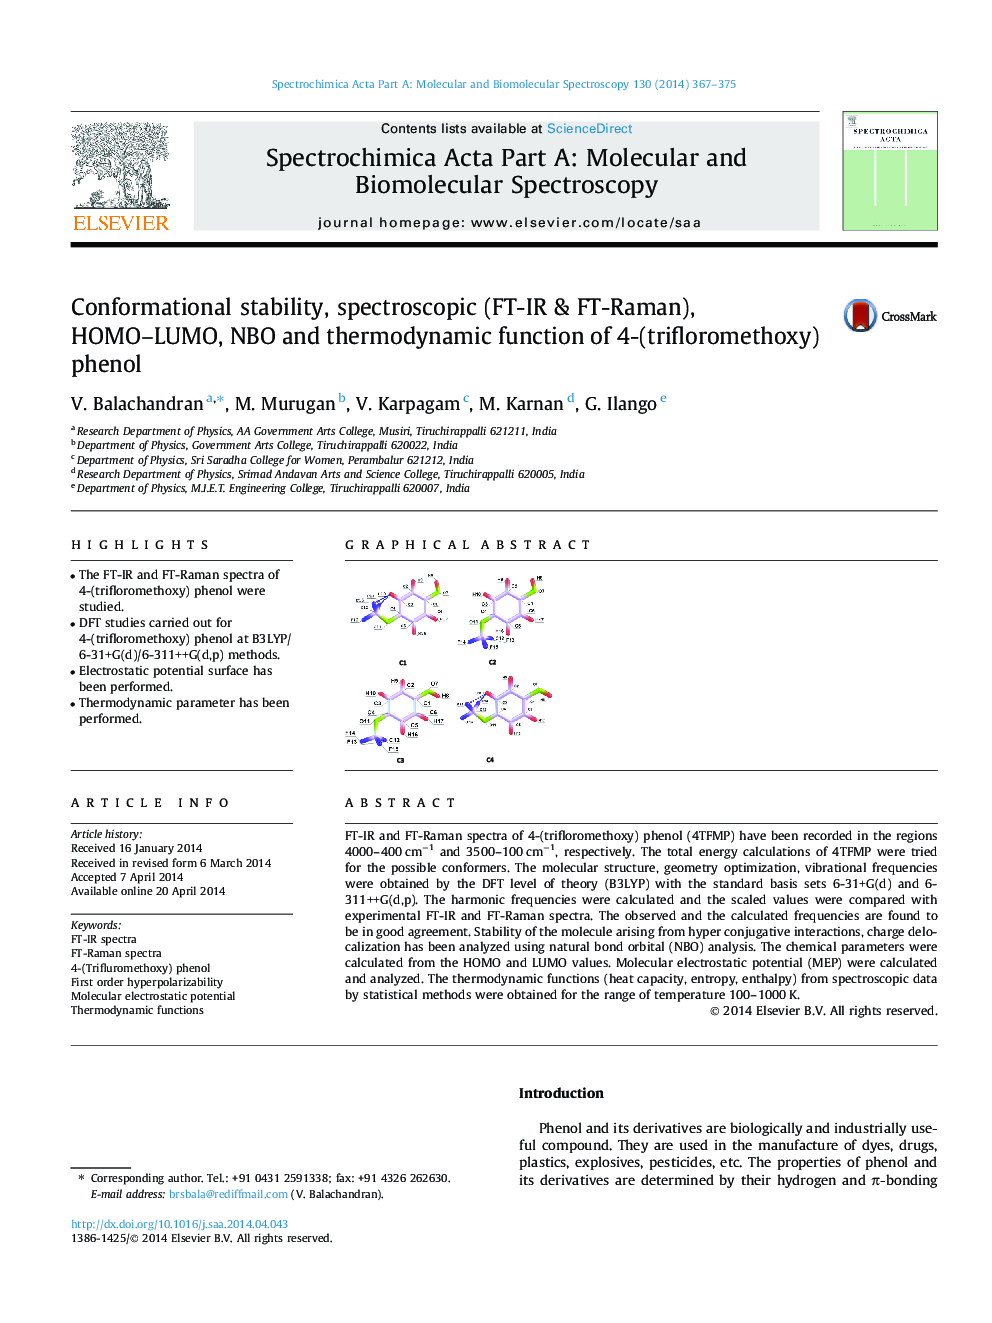 Conformational stability, spectroscopic (FT-IR & FT-Raman), HOMO–LUMO, NBO and thermodynamic function of 4-(trifloromethoxy) phenol